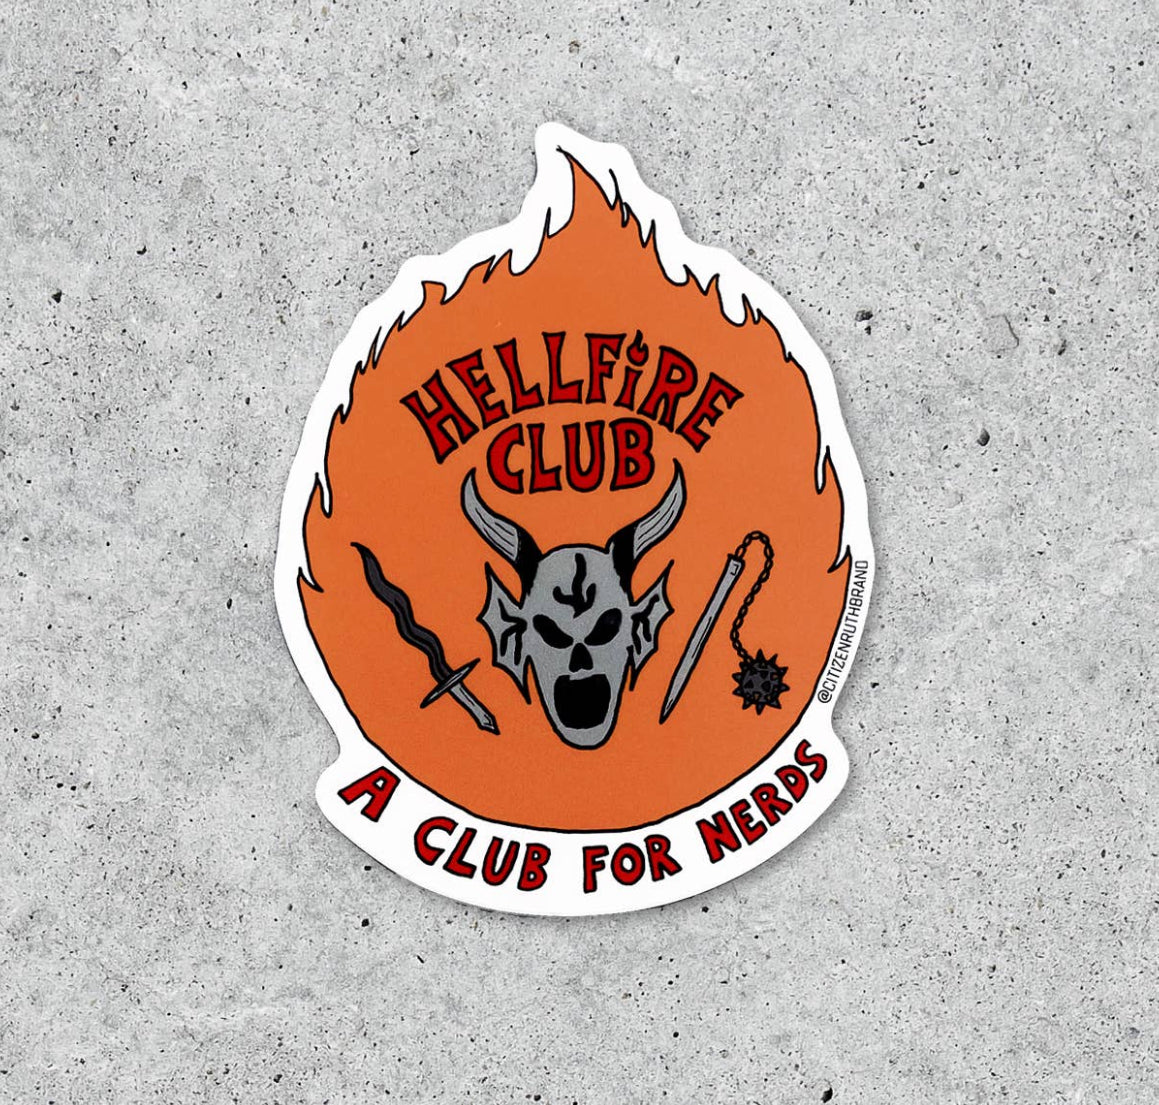 Hellfire Club Sticker